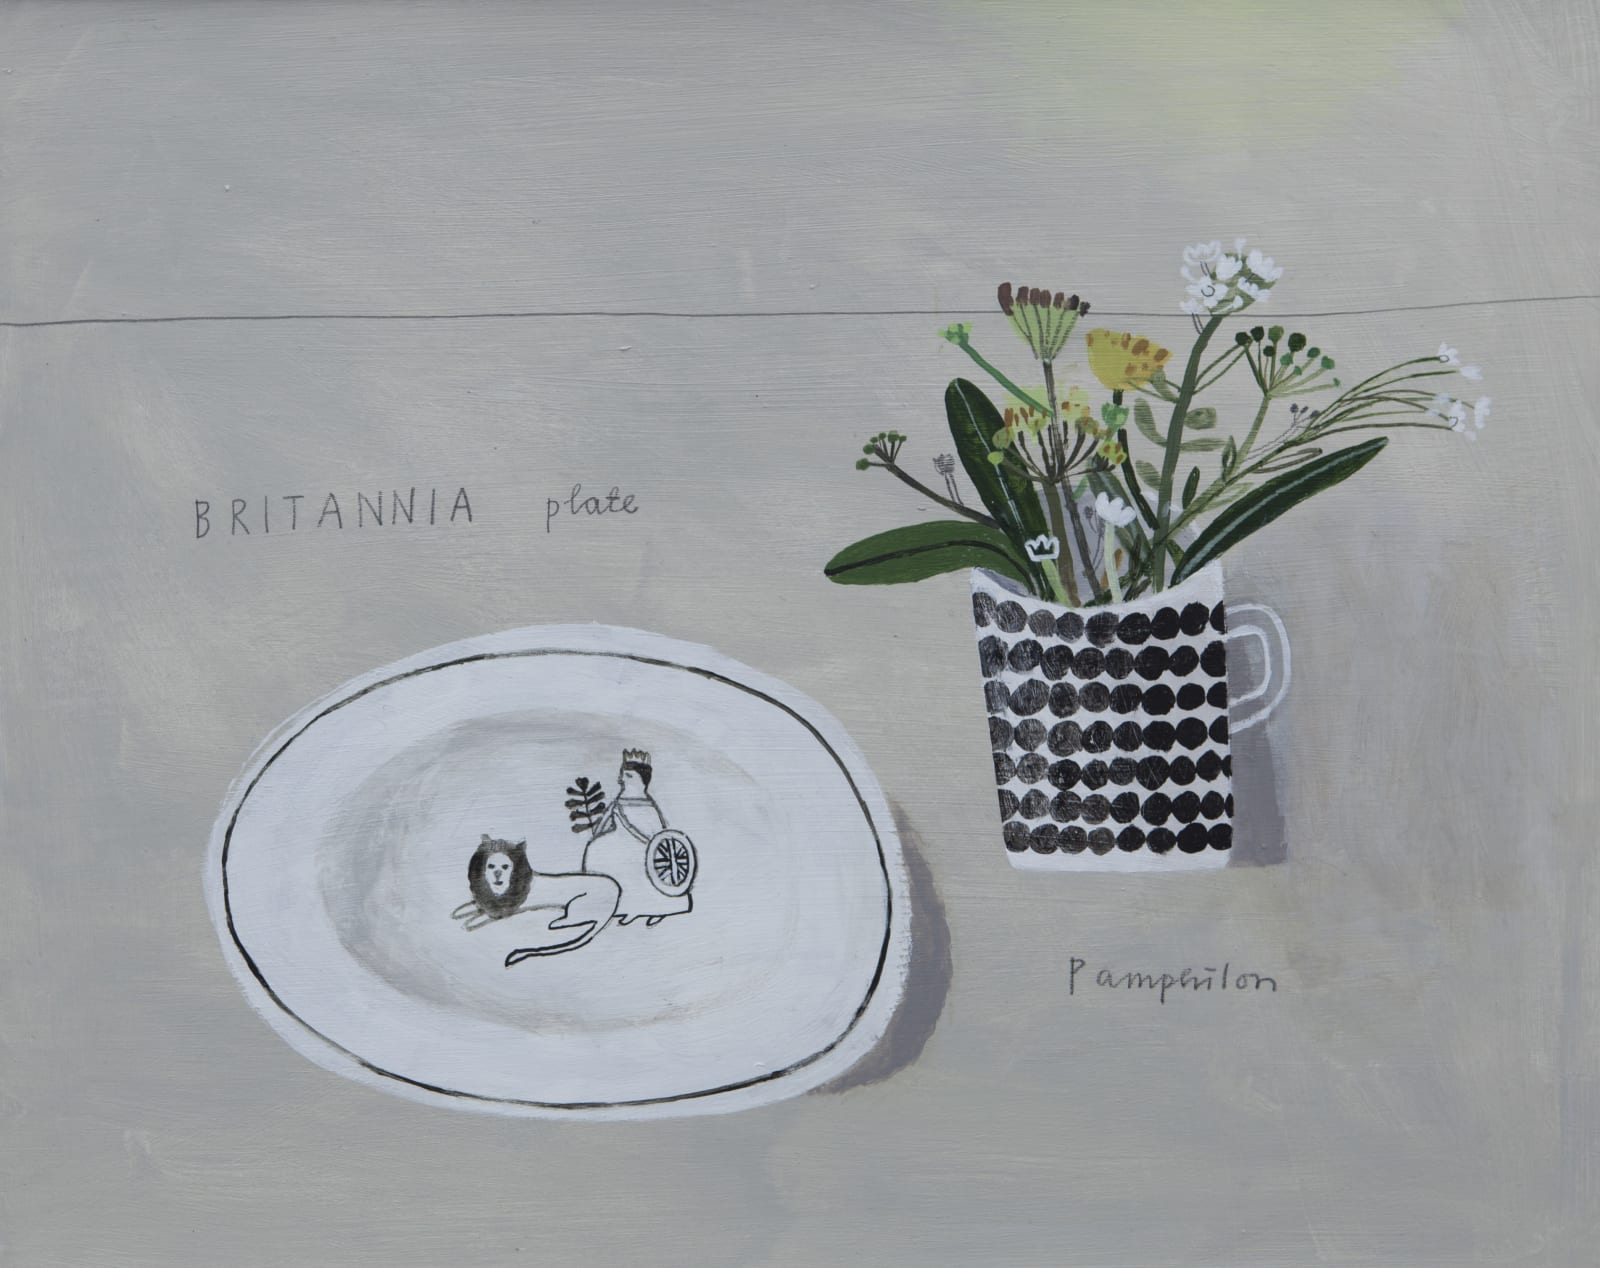 Elaine Pamphilon, Britannia Plate